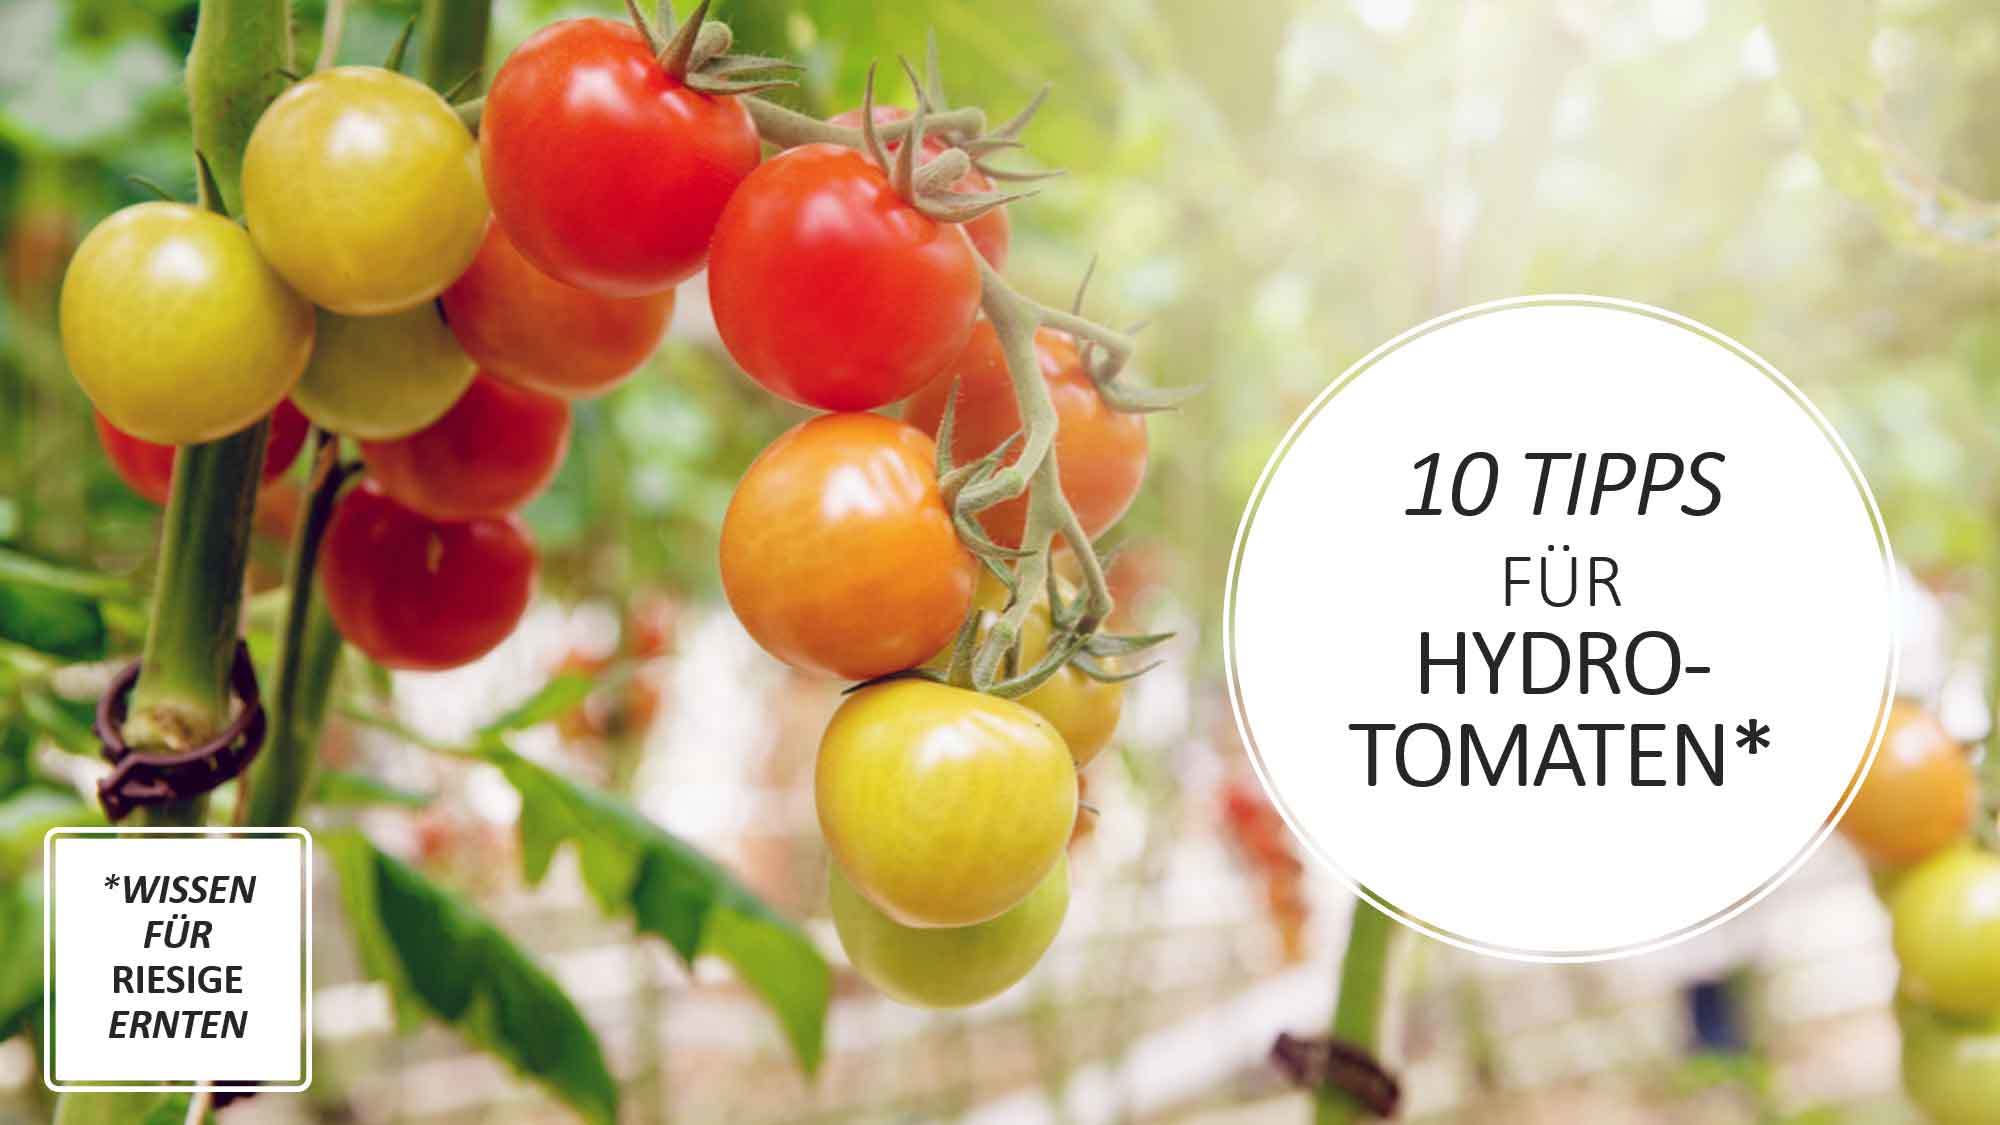 Hydroponik Tomaten